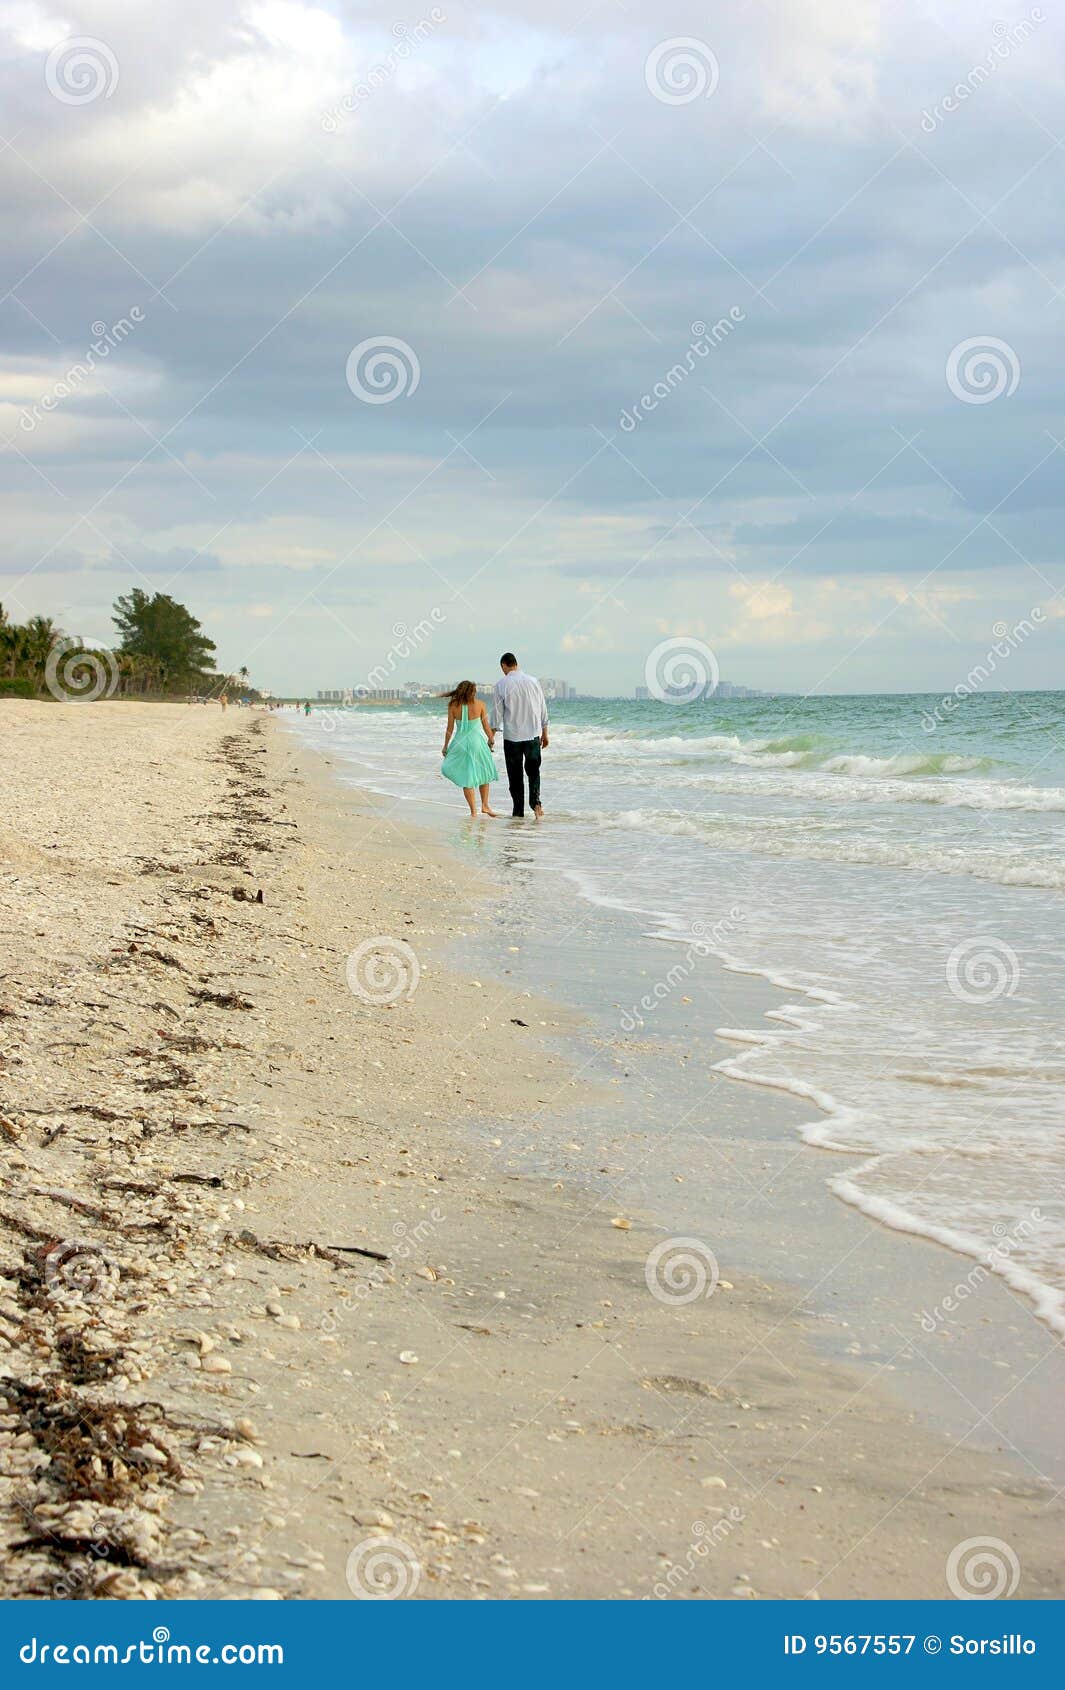 People Walking Away On The Beach